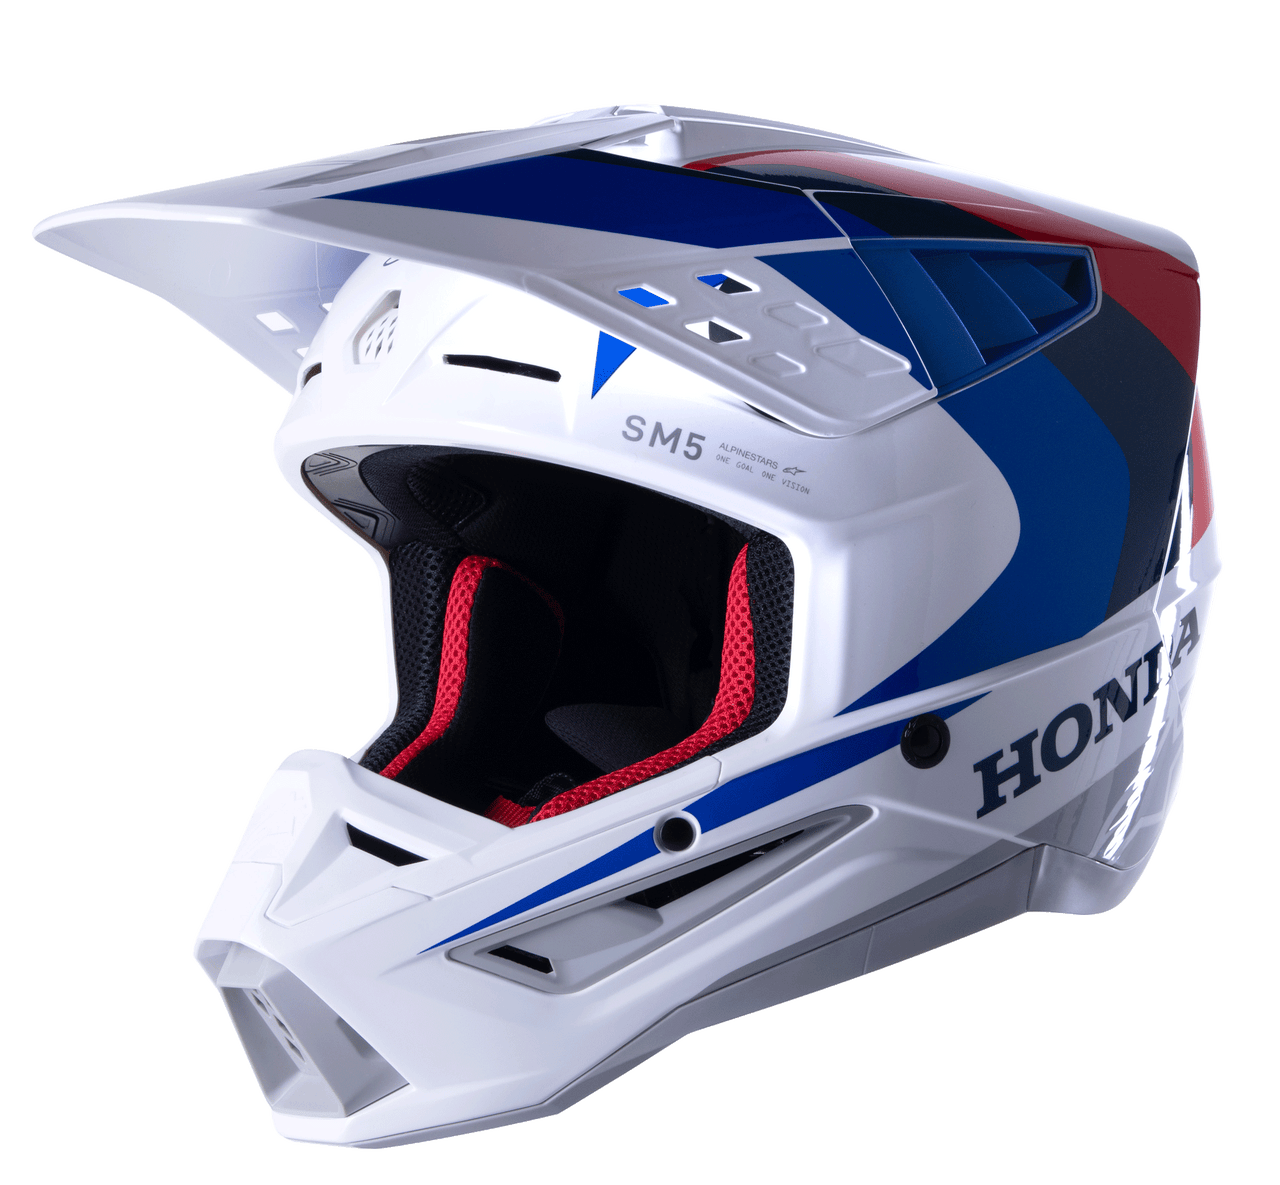 SM5 Helmet Collection